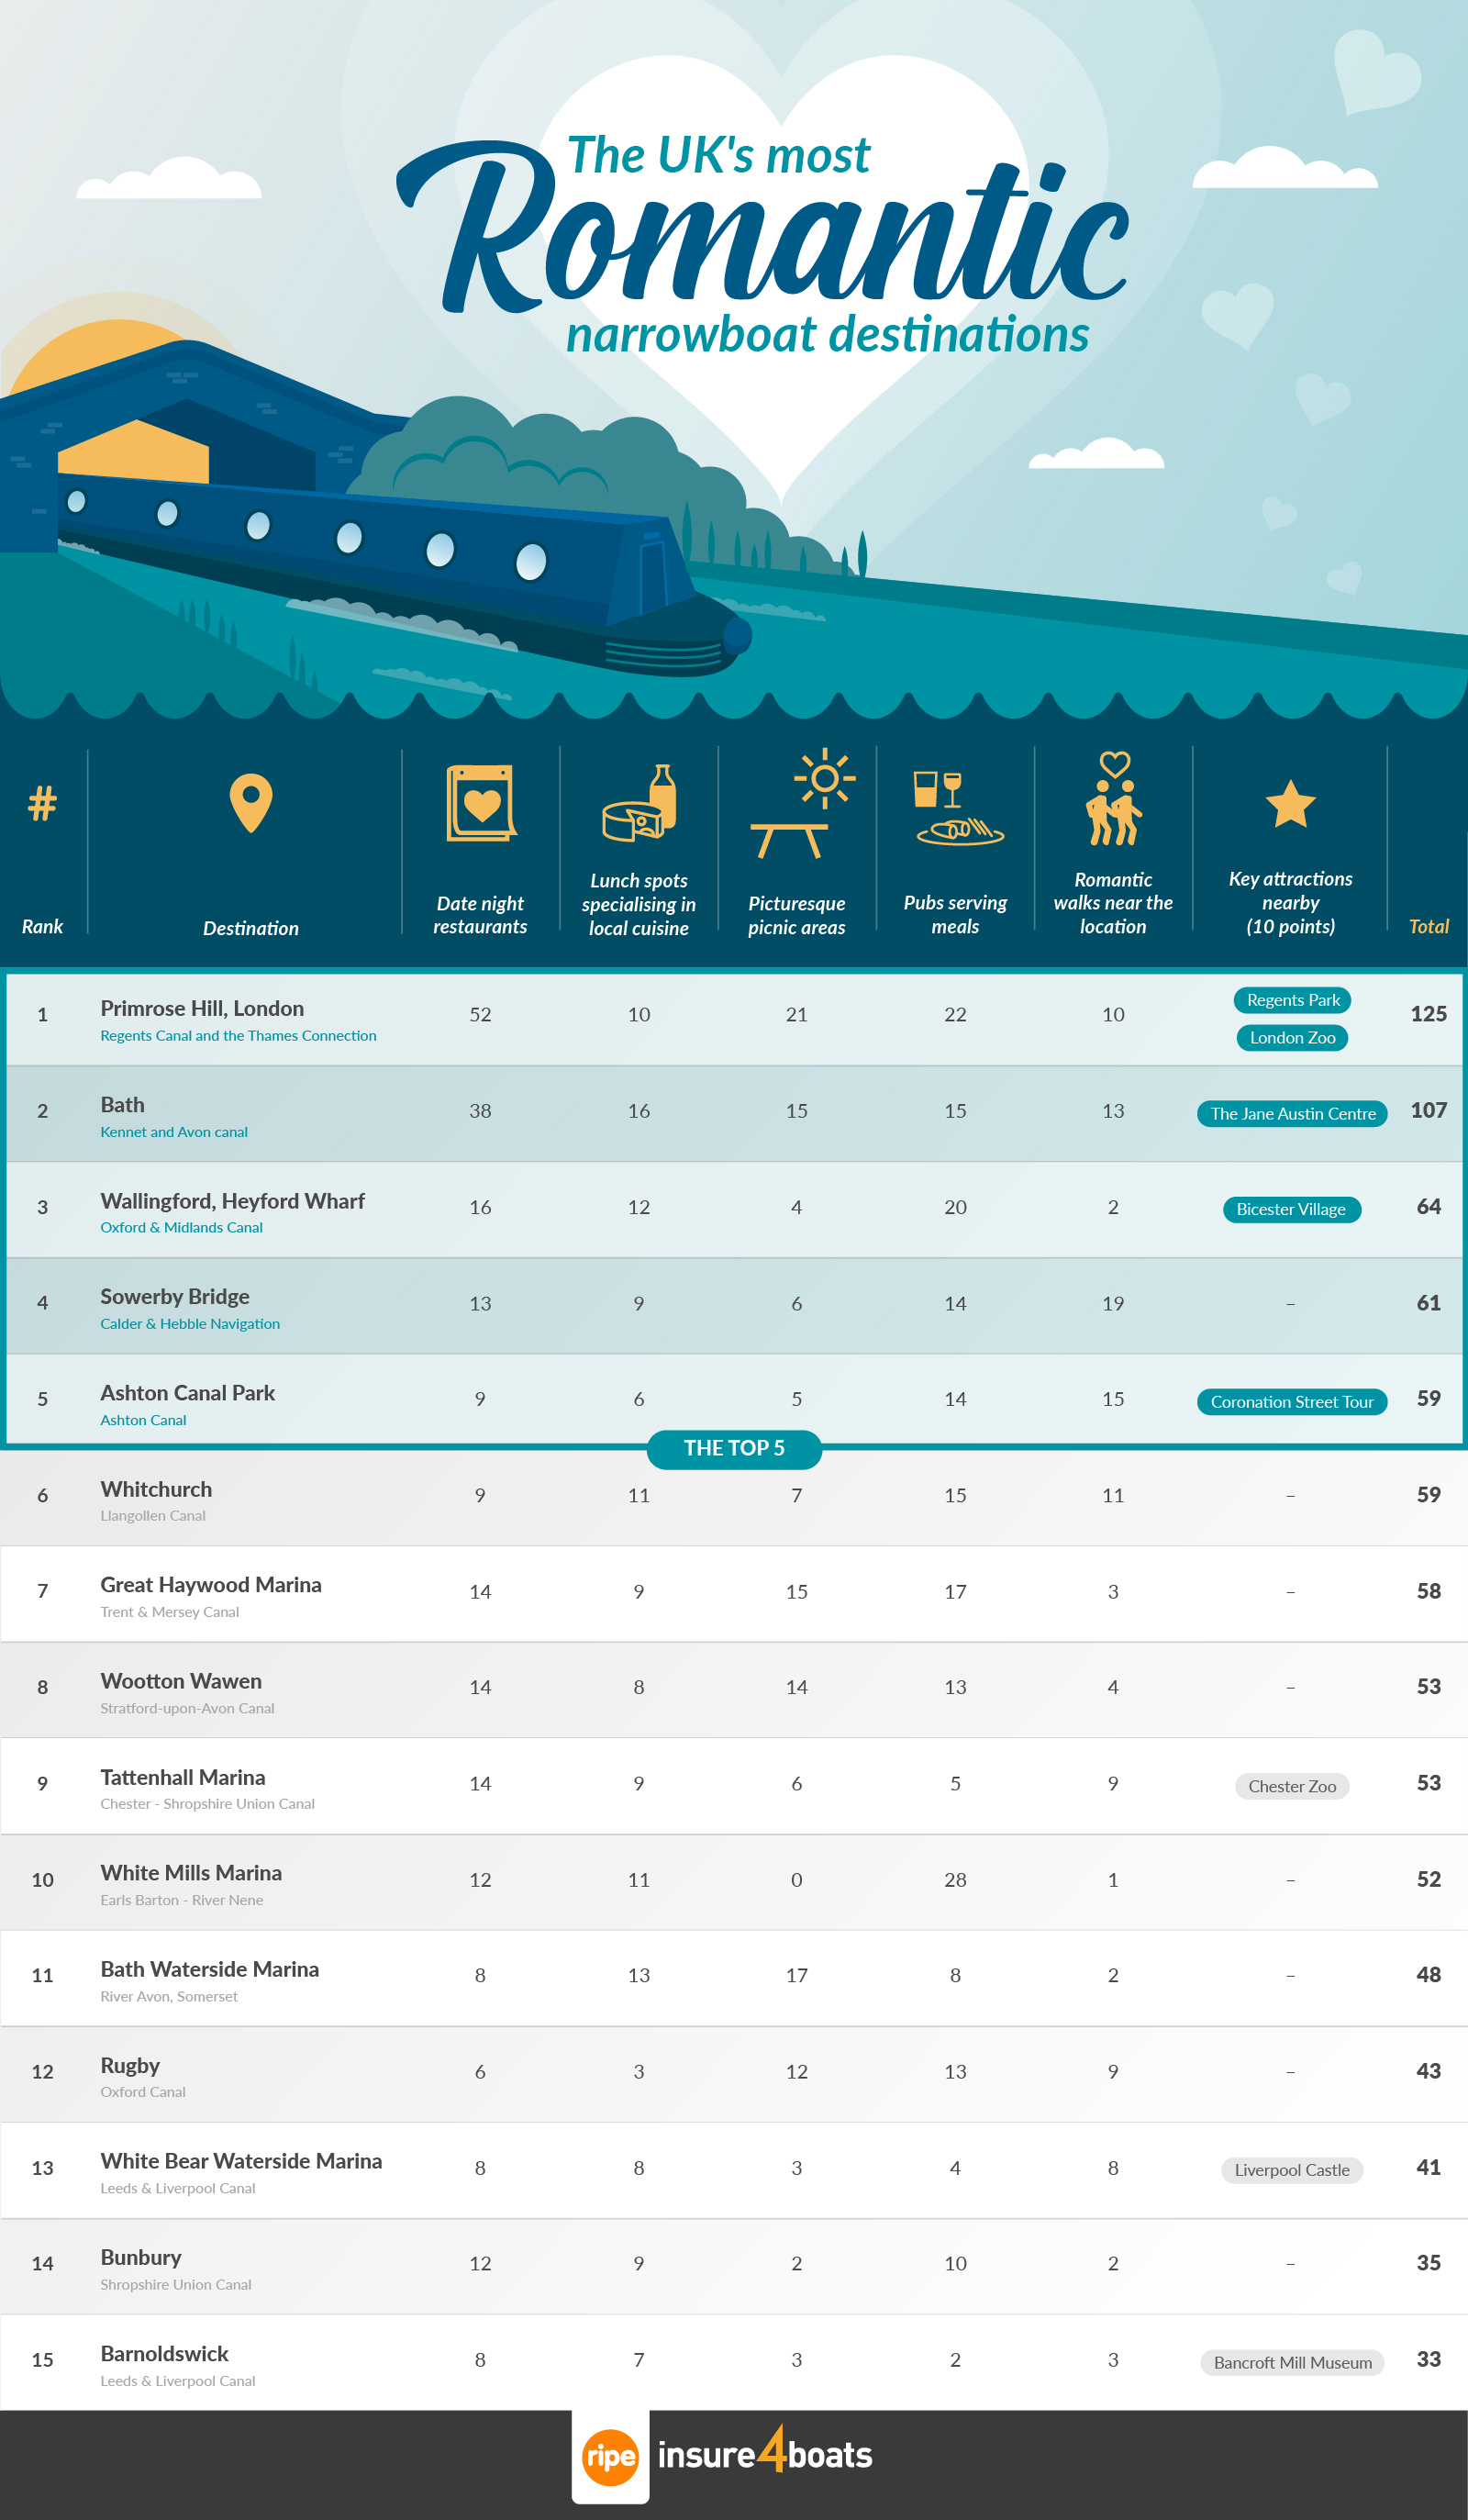 UK romantic narrowboat destinations infographic